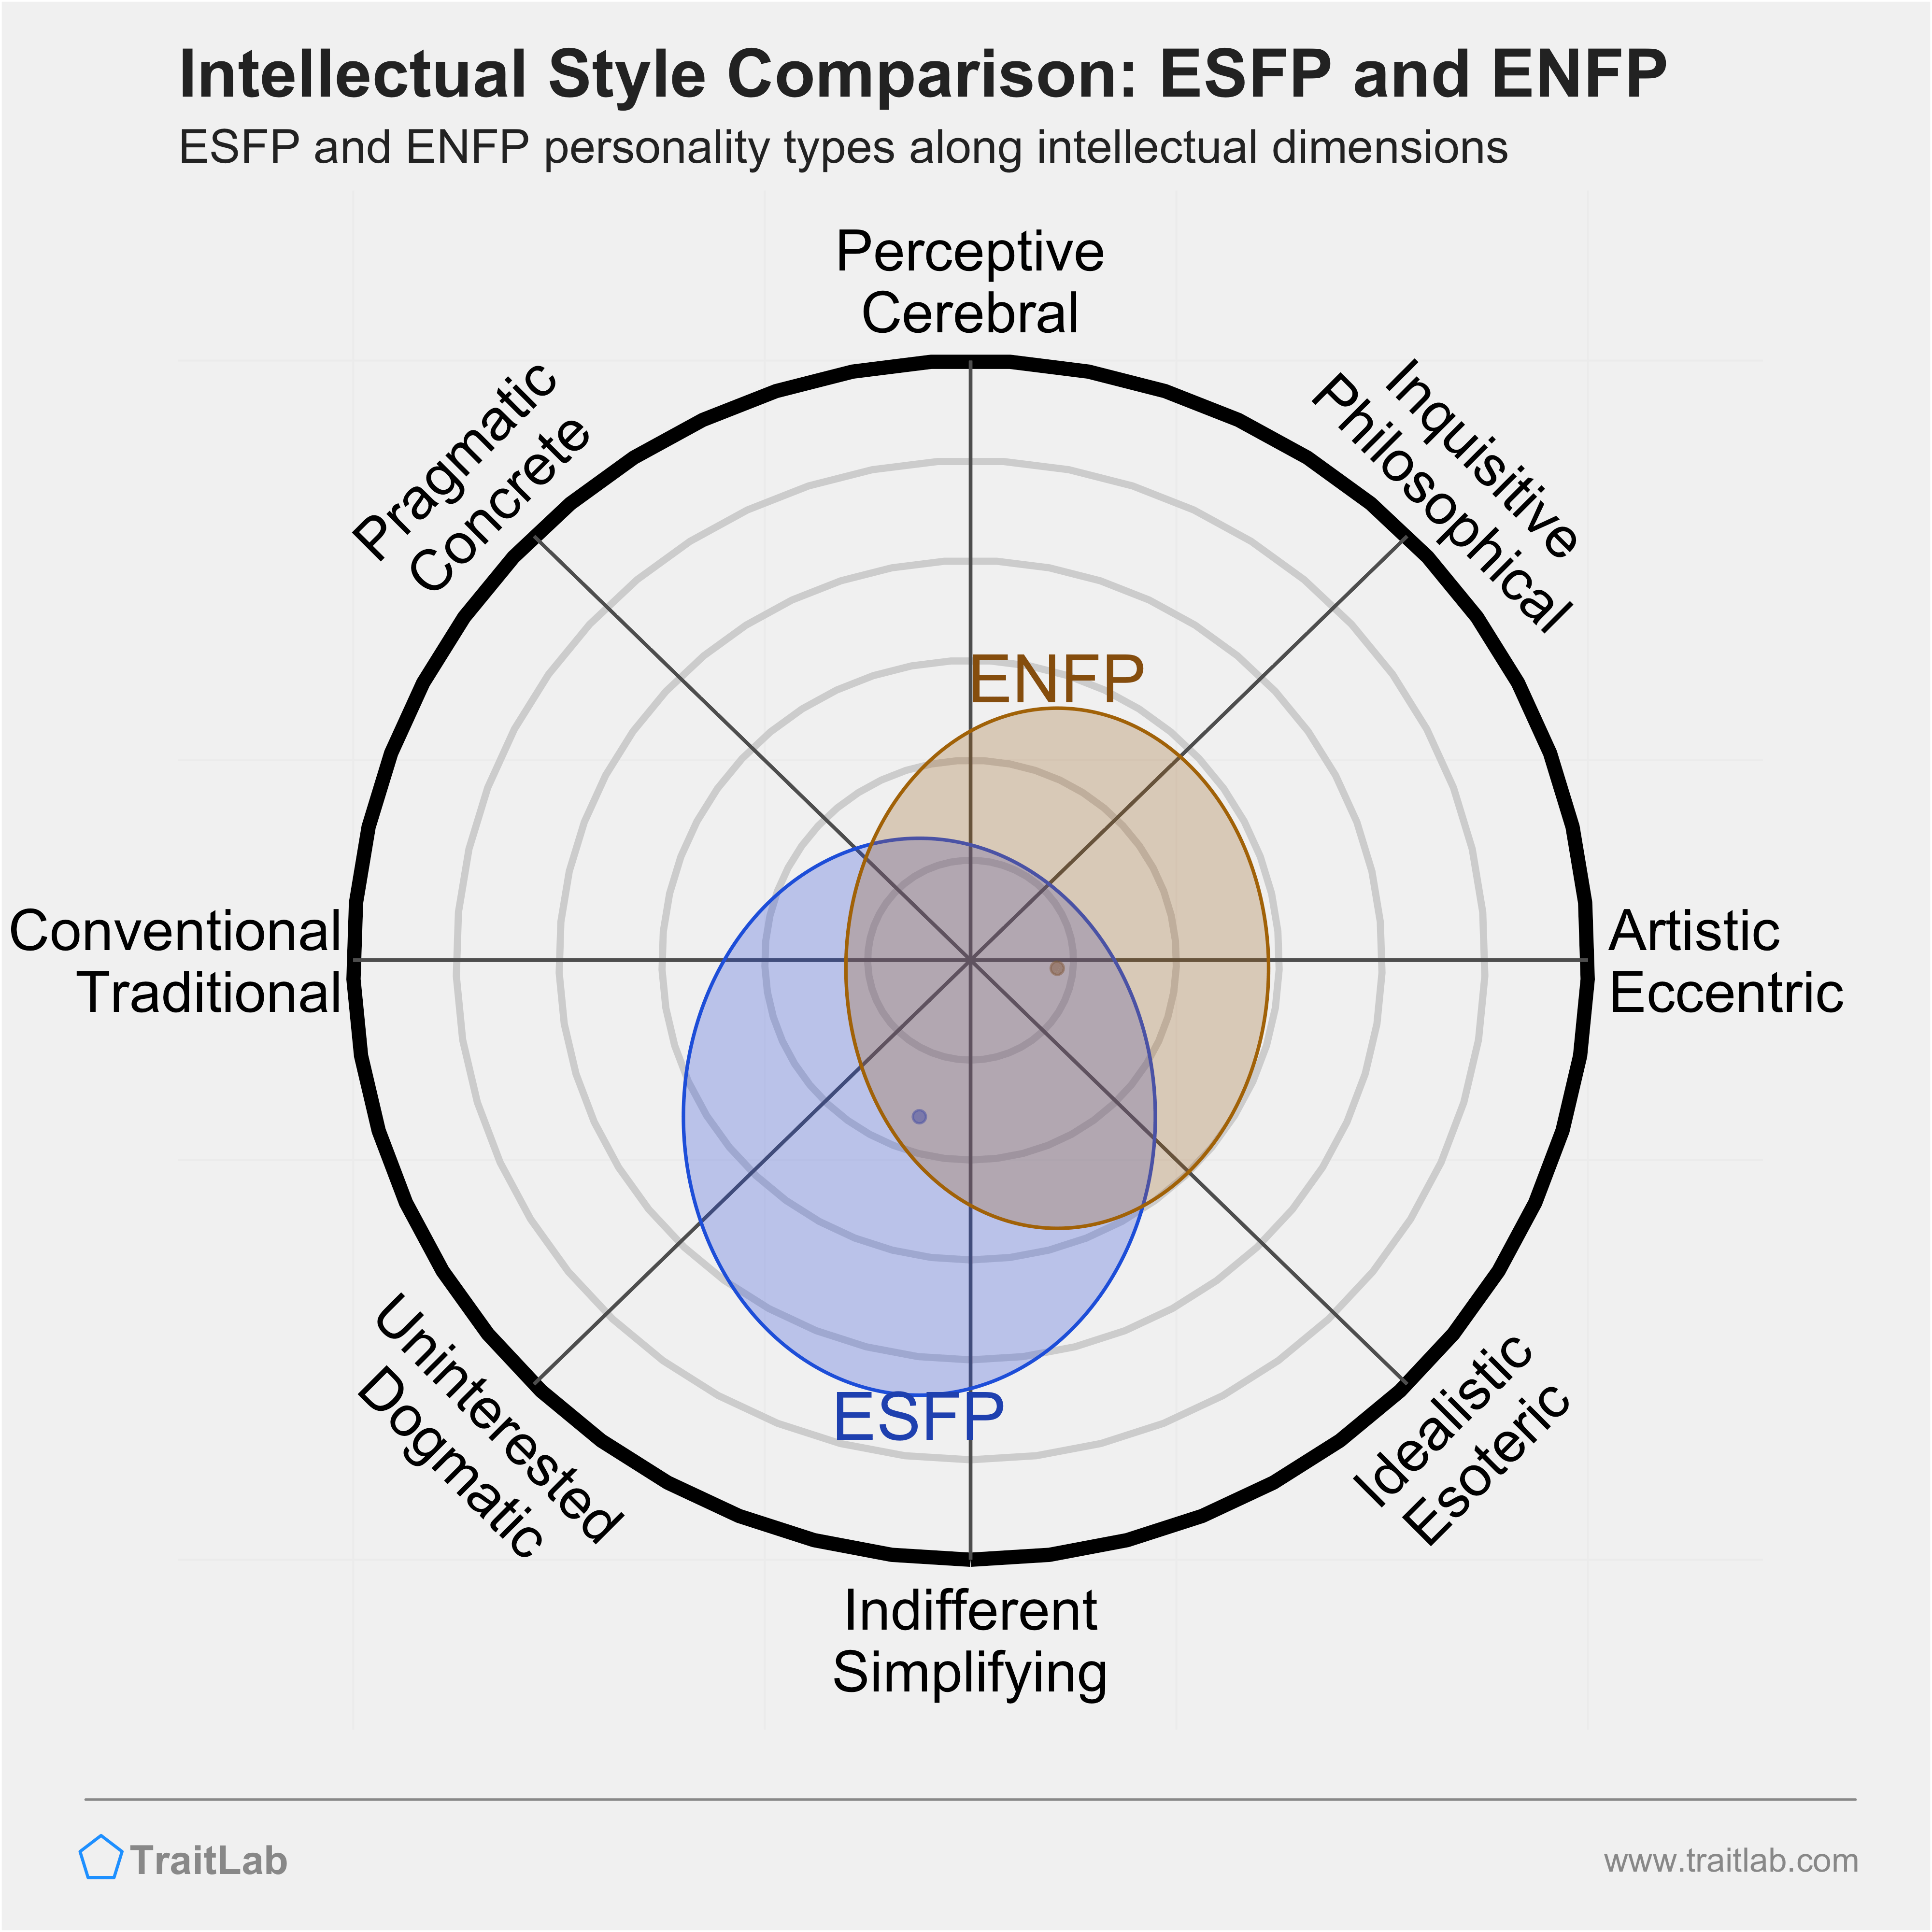 ESFP and ENFP comparison across intellectual dimensions